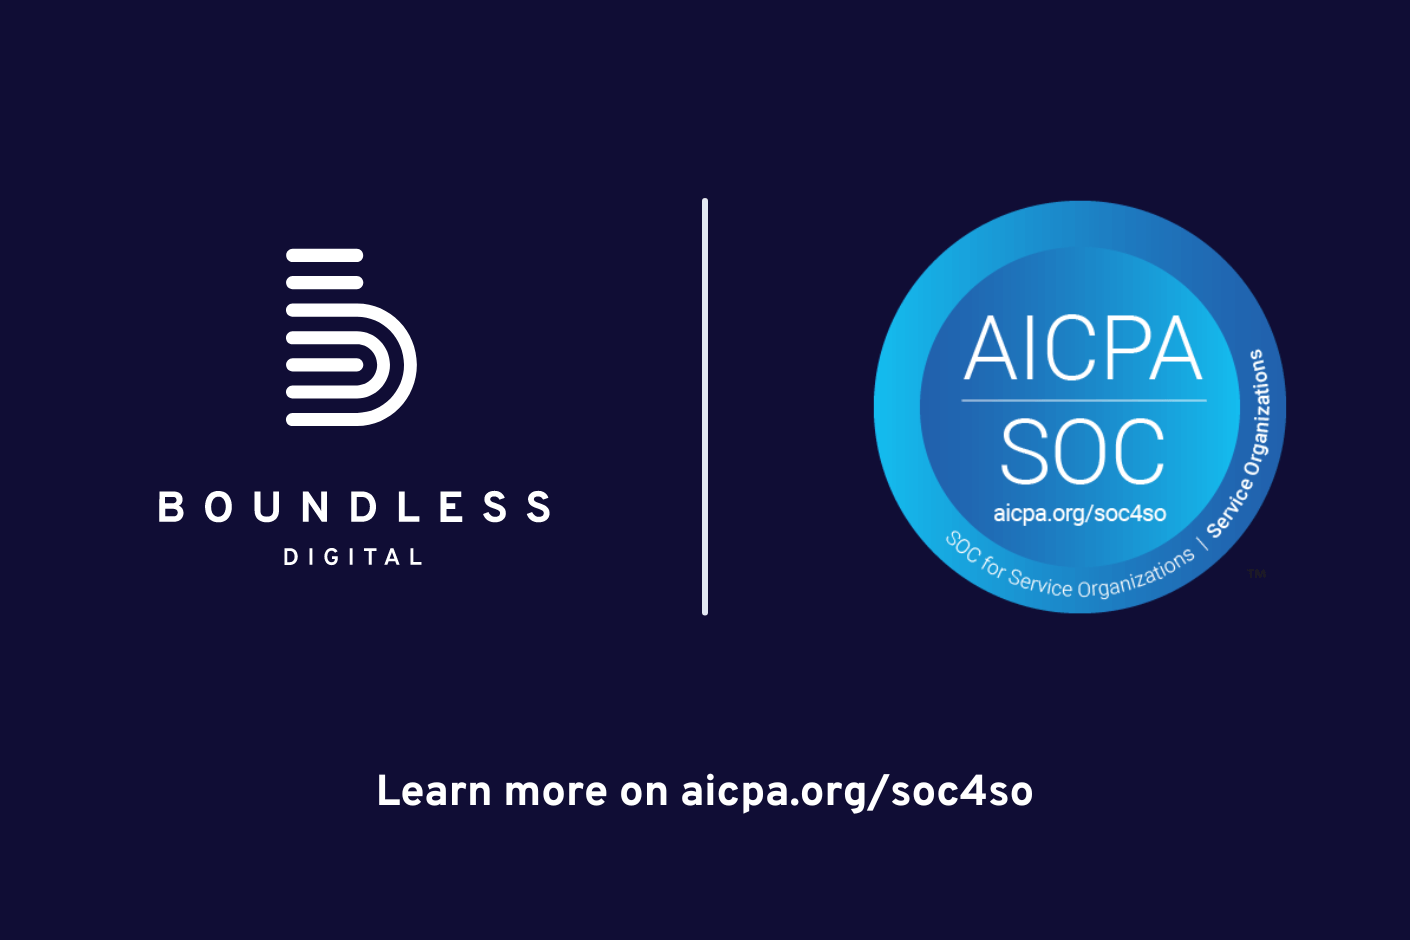 boundless digital - AICPA SOC